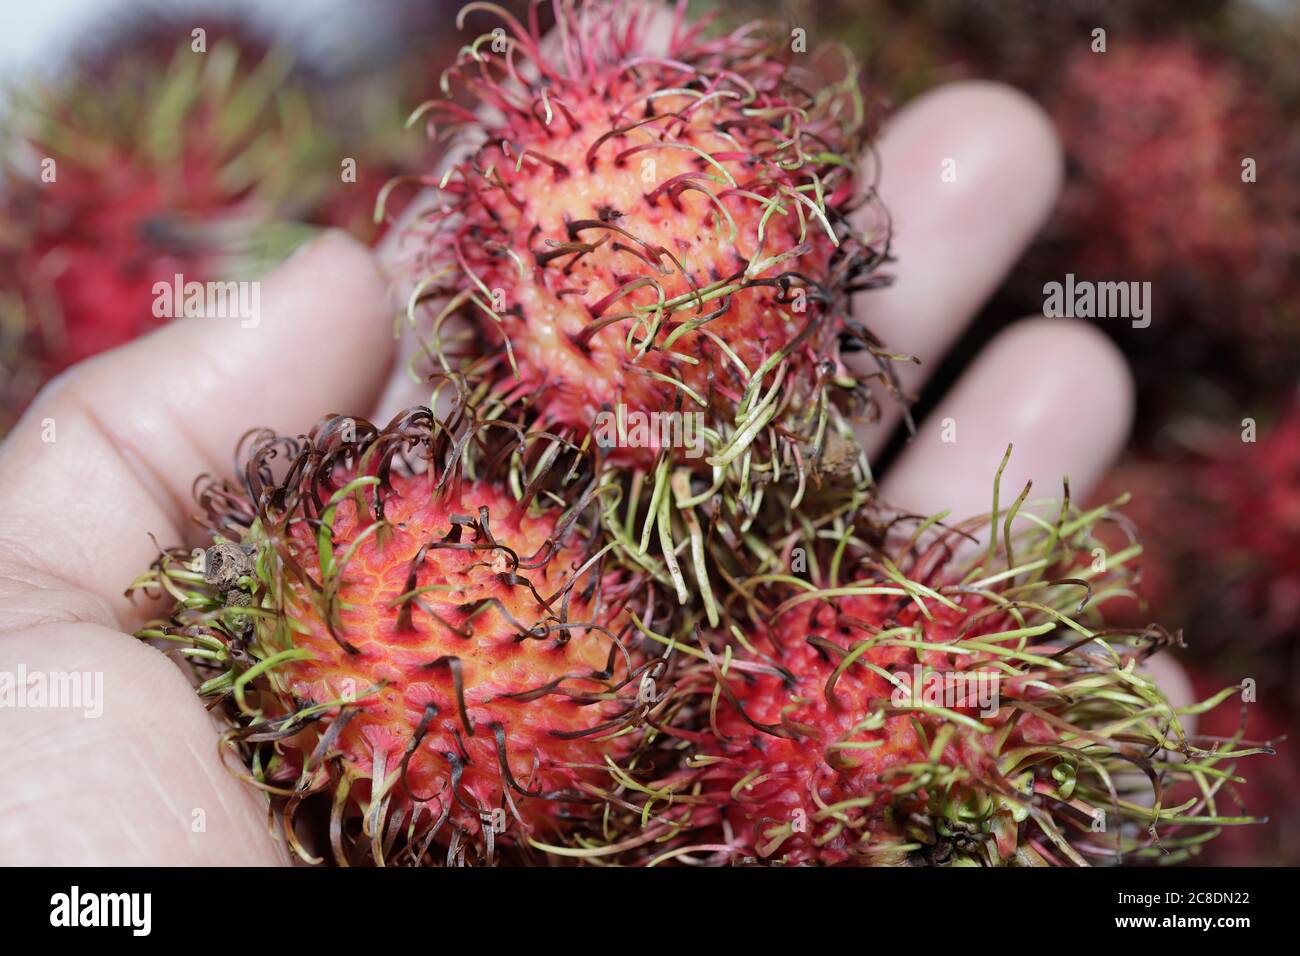 Rambutan exotic fruits in palm of hand Stock Photo